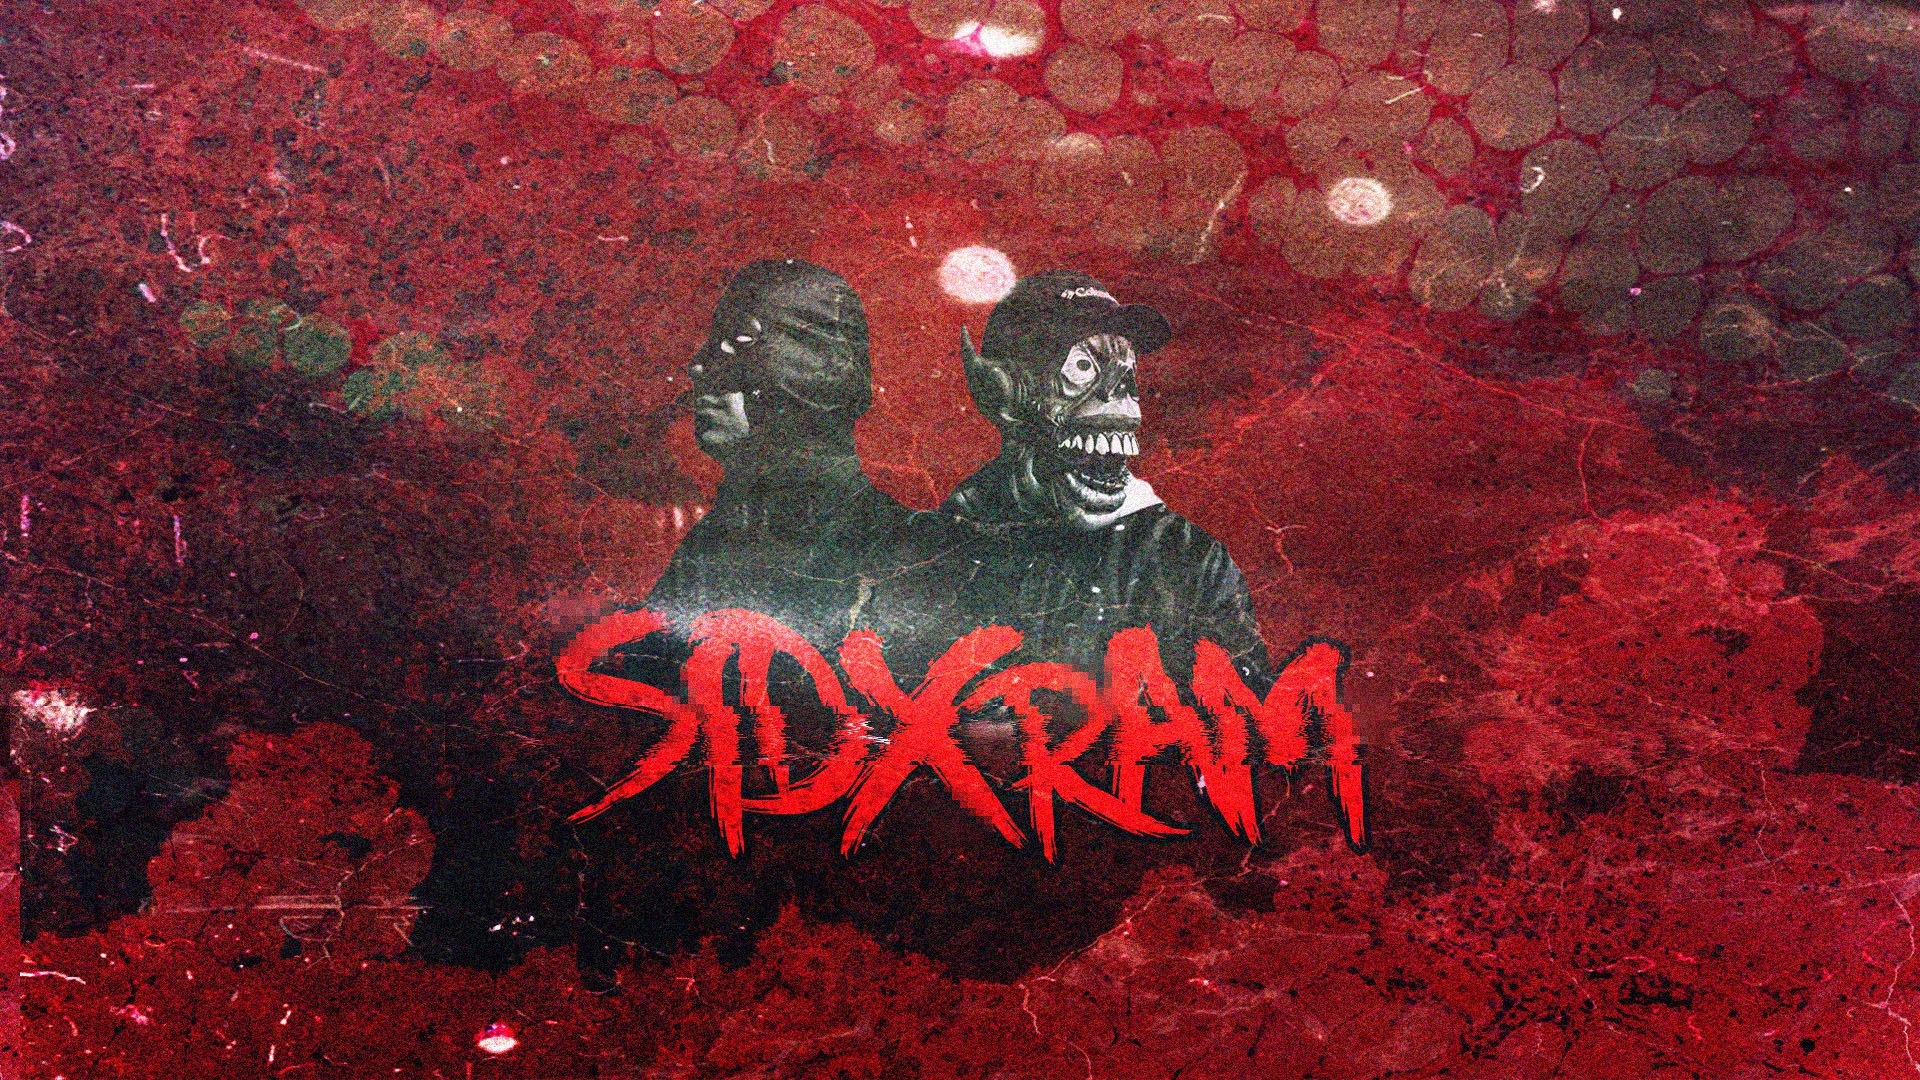 Sid ram. Sid рэпер. SIDXRAM логотип. SIDXRAM арт. Картинки Сидоджи.